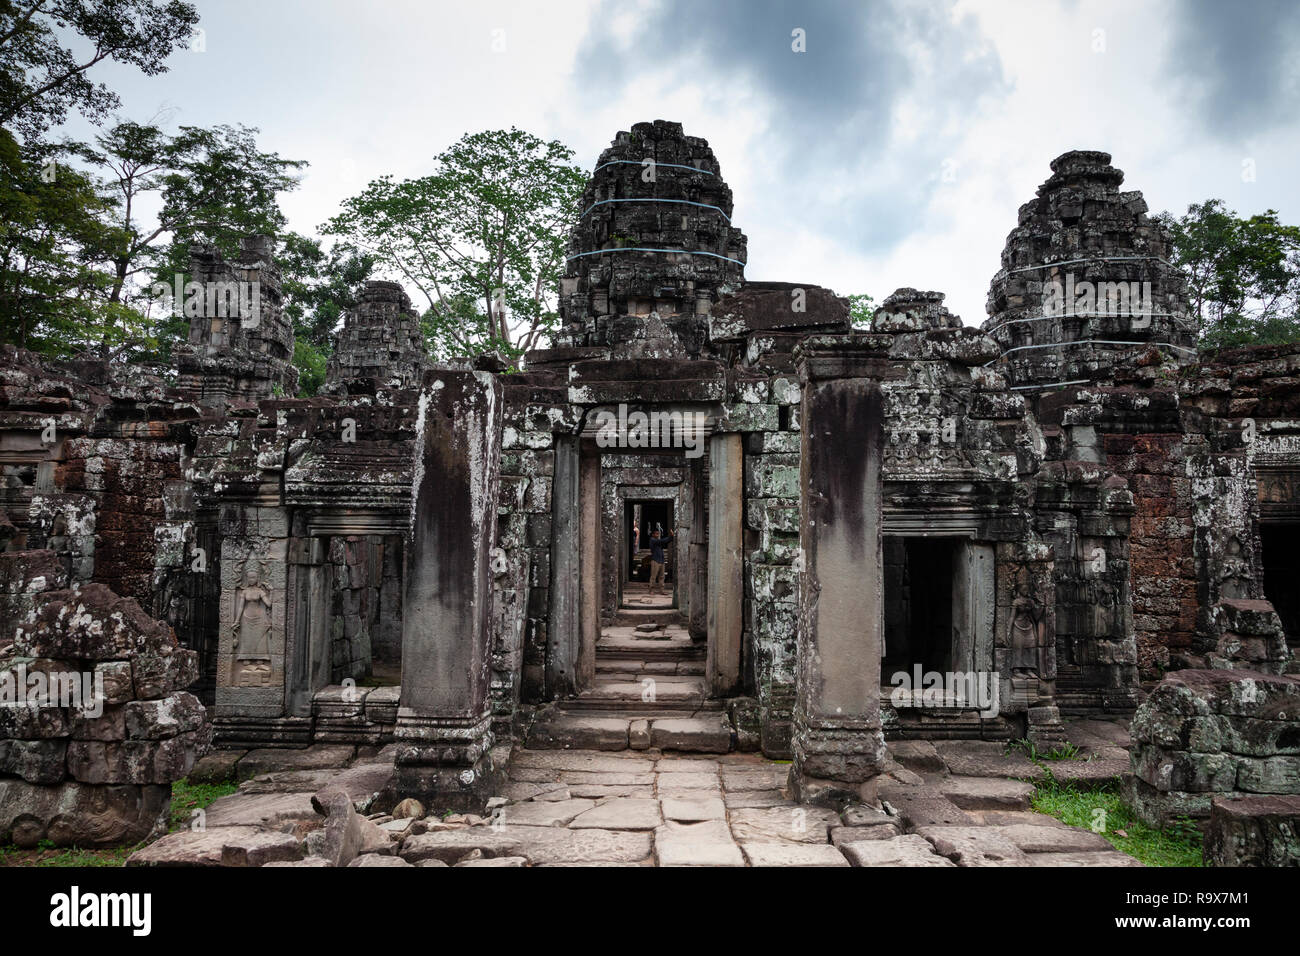 Stone buildings in Cambodia Stock Photo